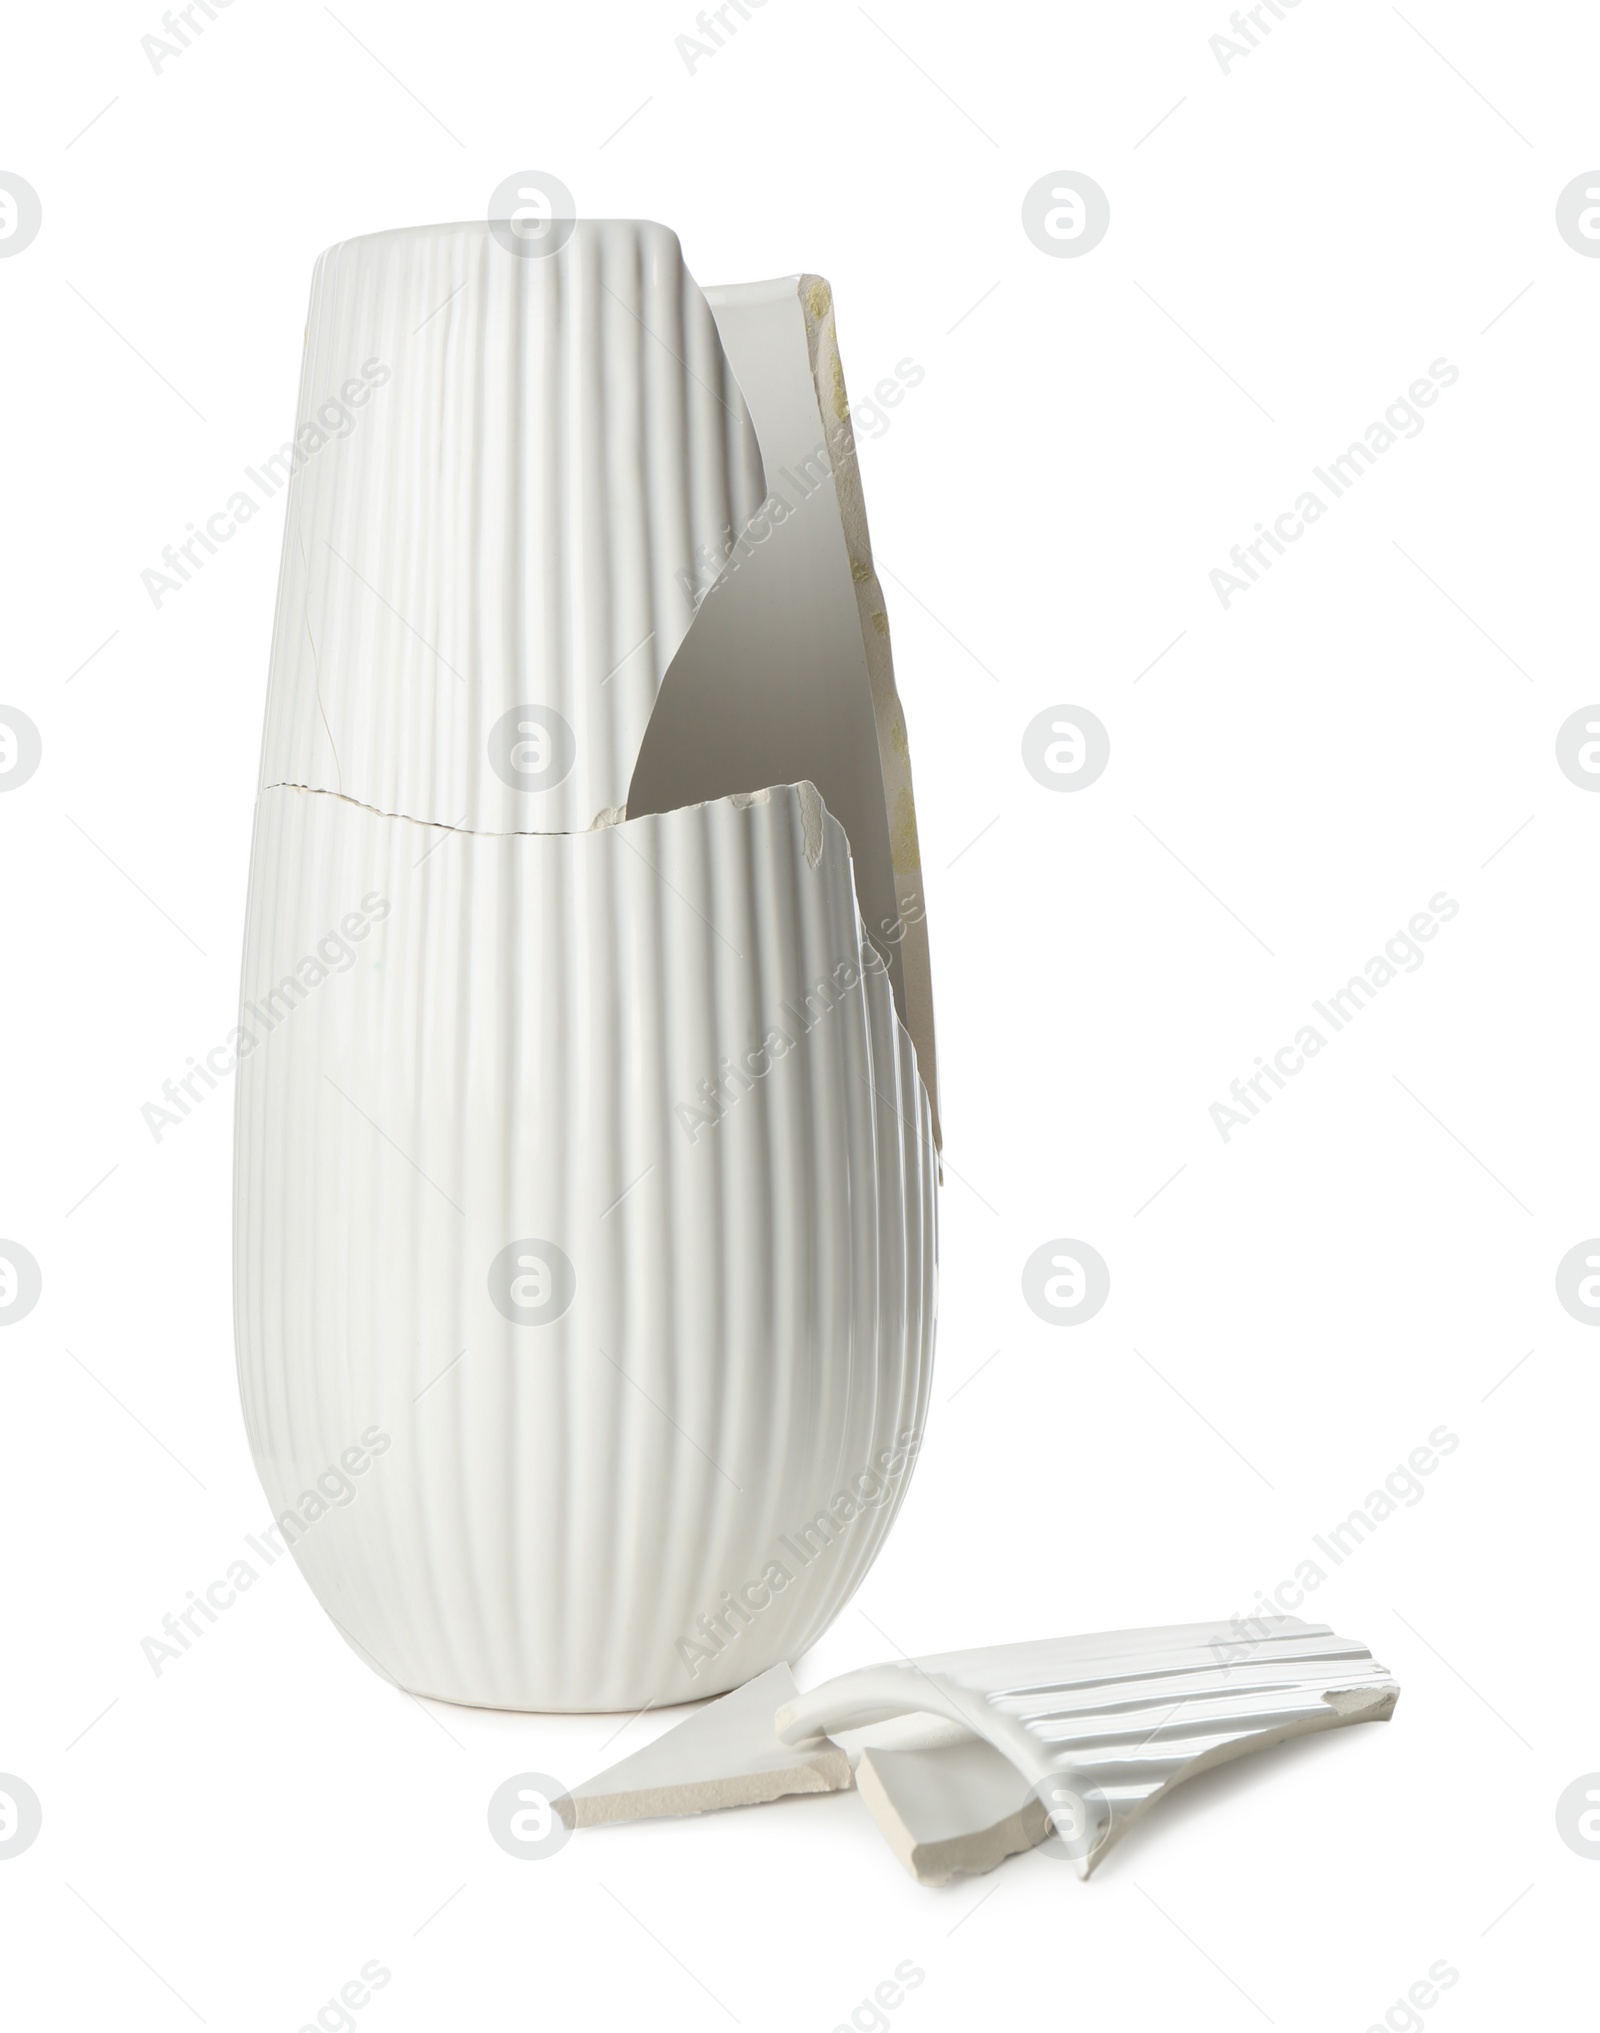 Photo of Broken bright ceramic vase isolated on white